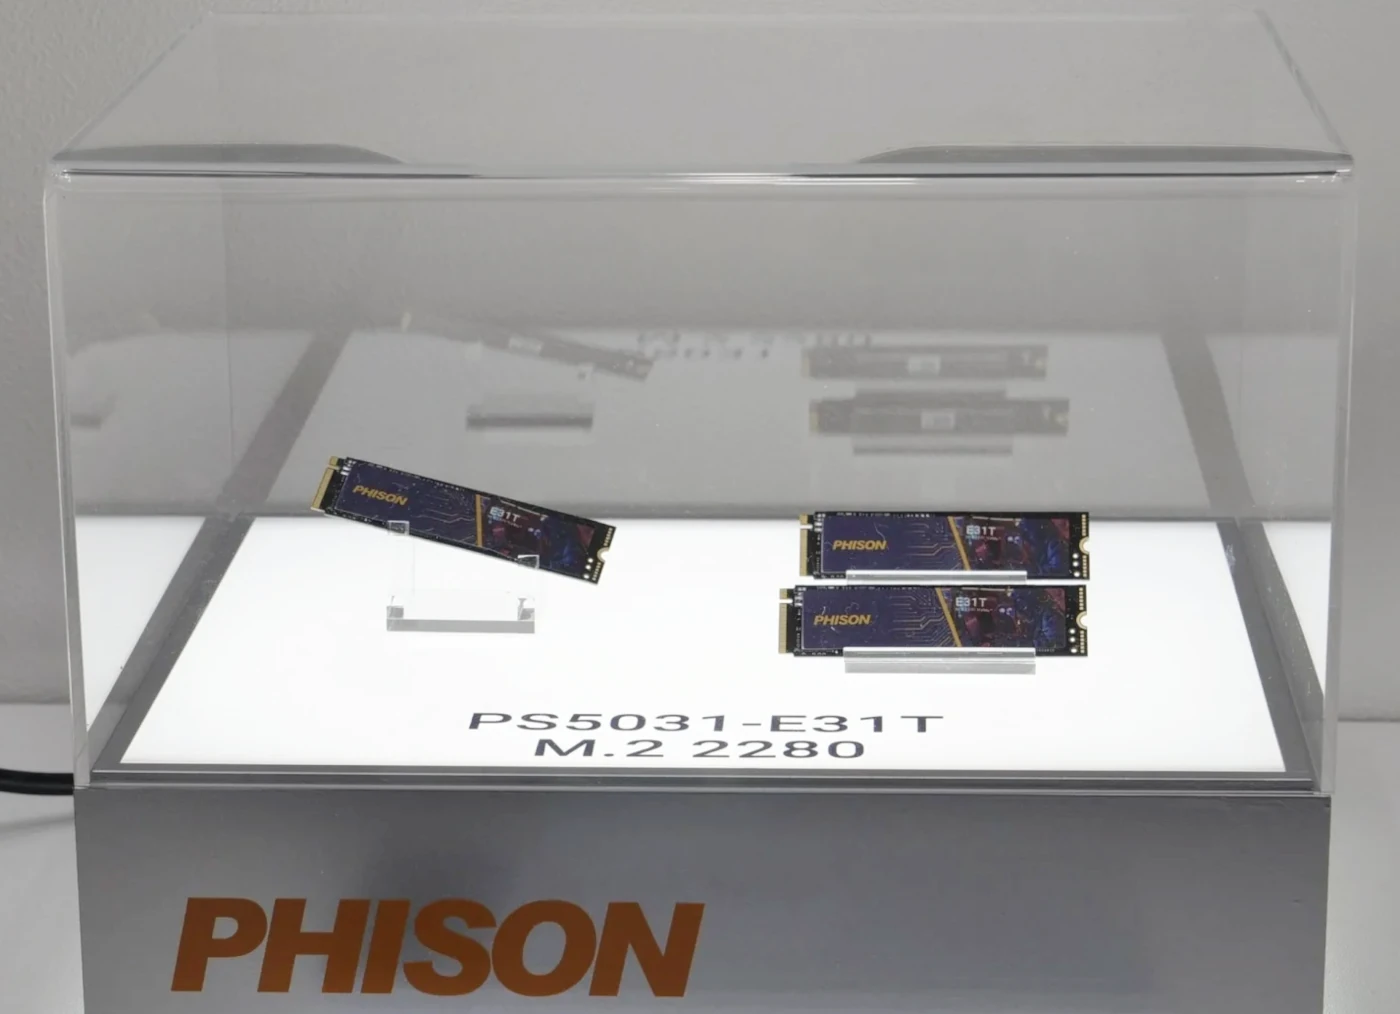 Phison E31t Computex 2024